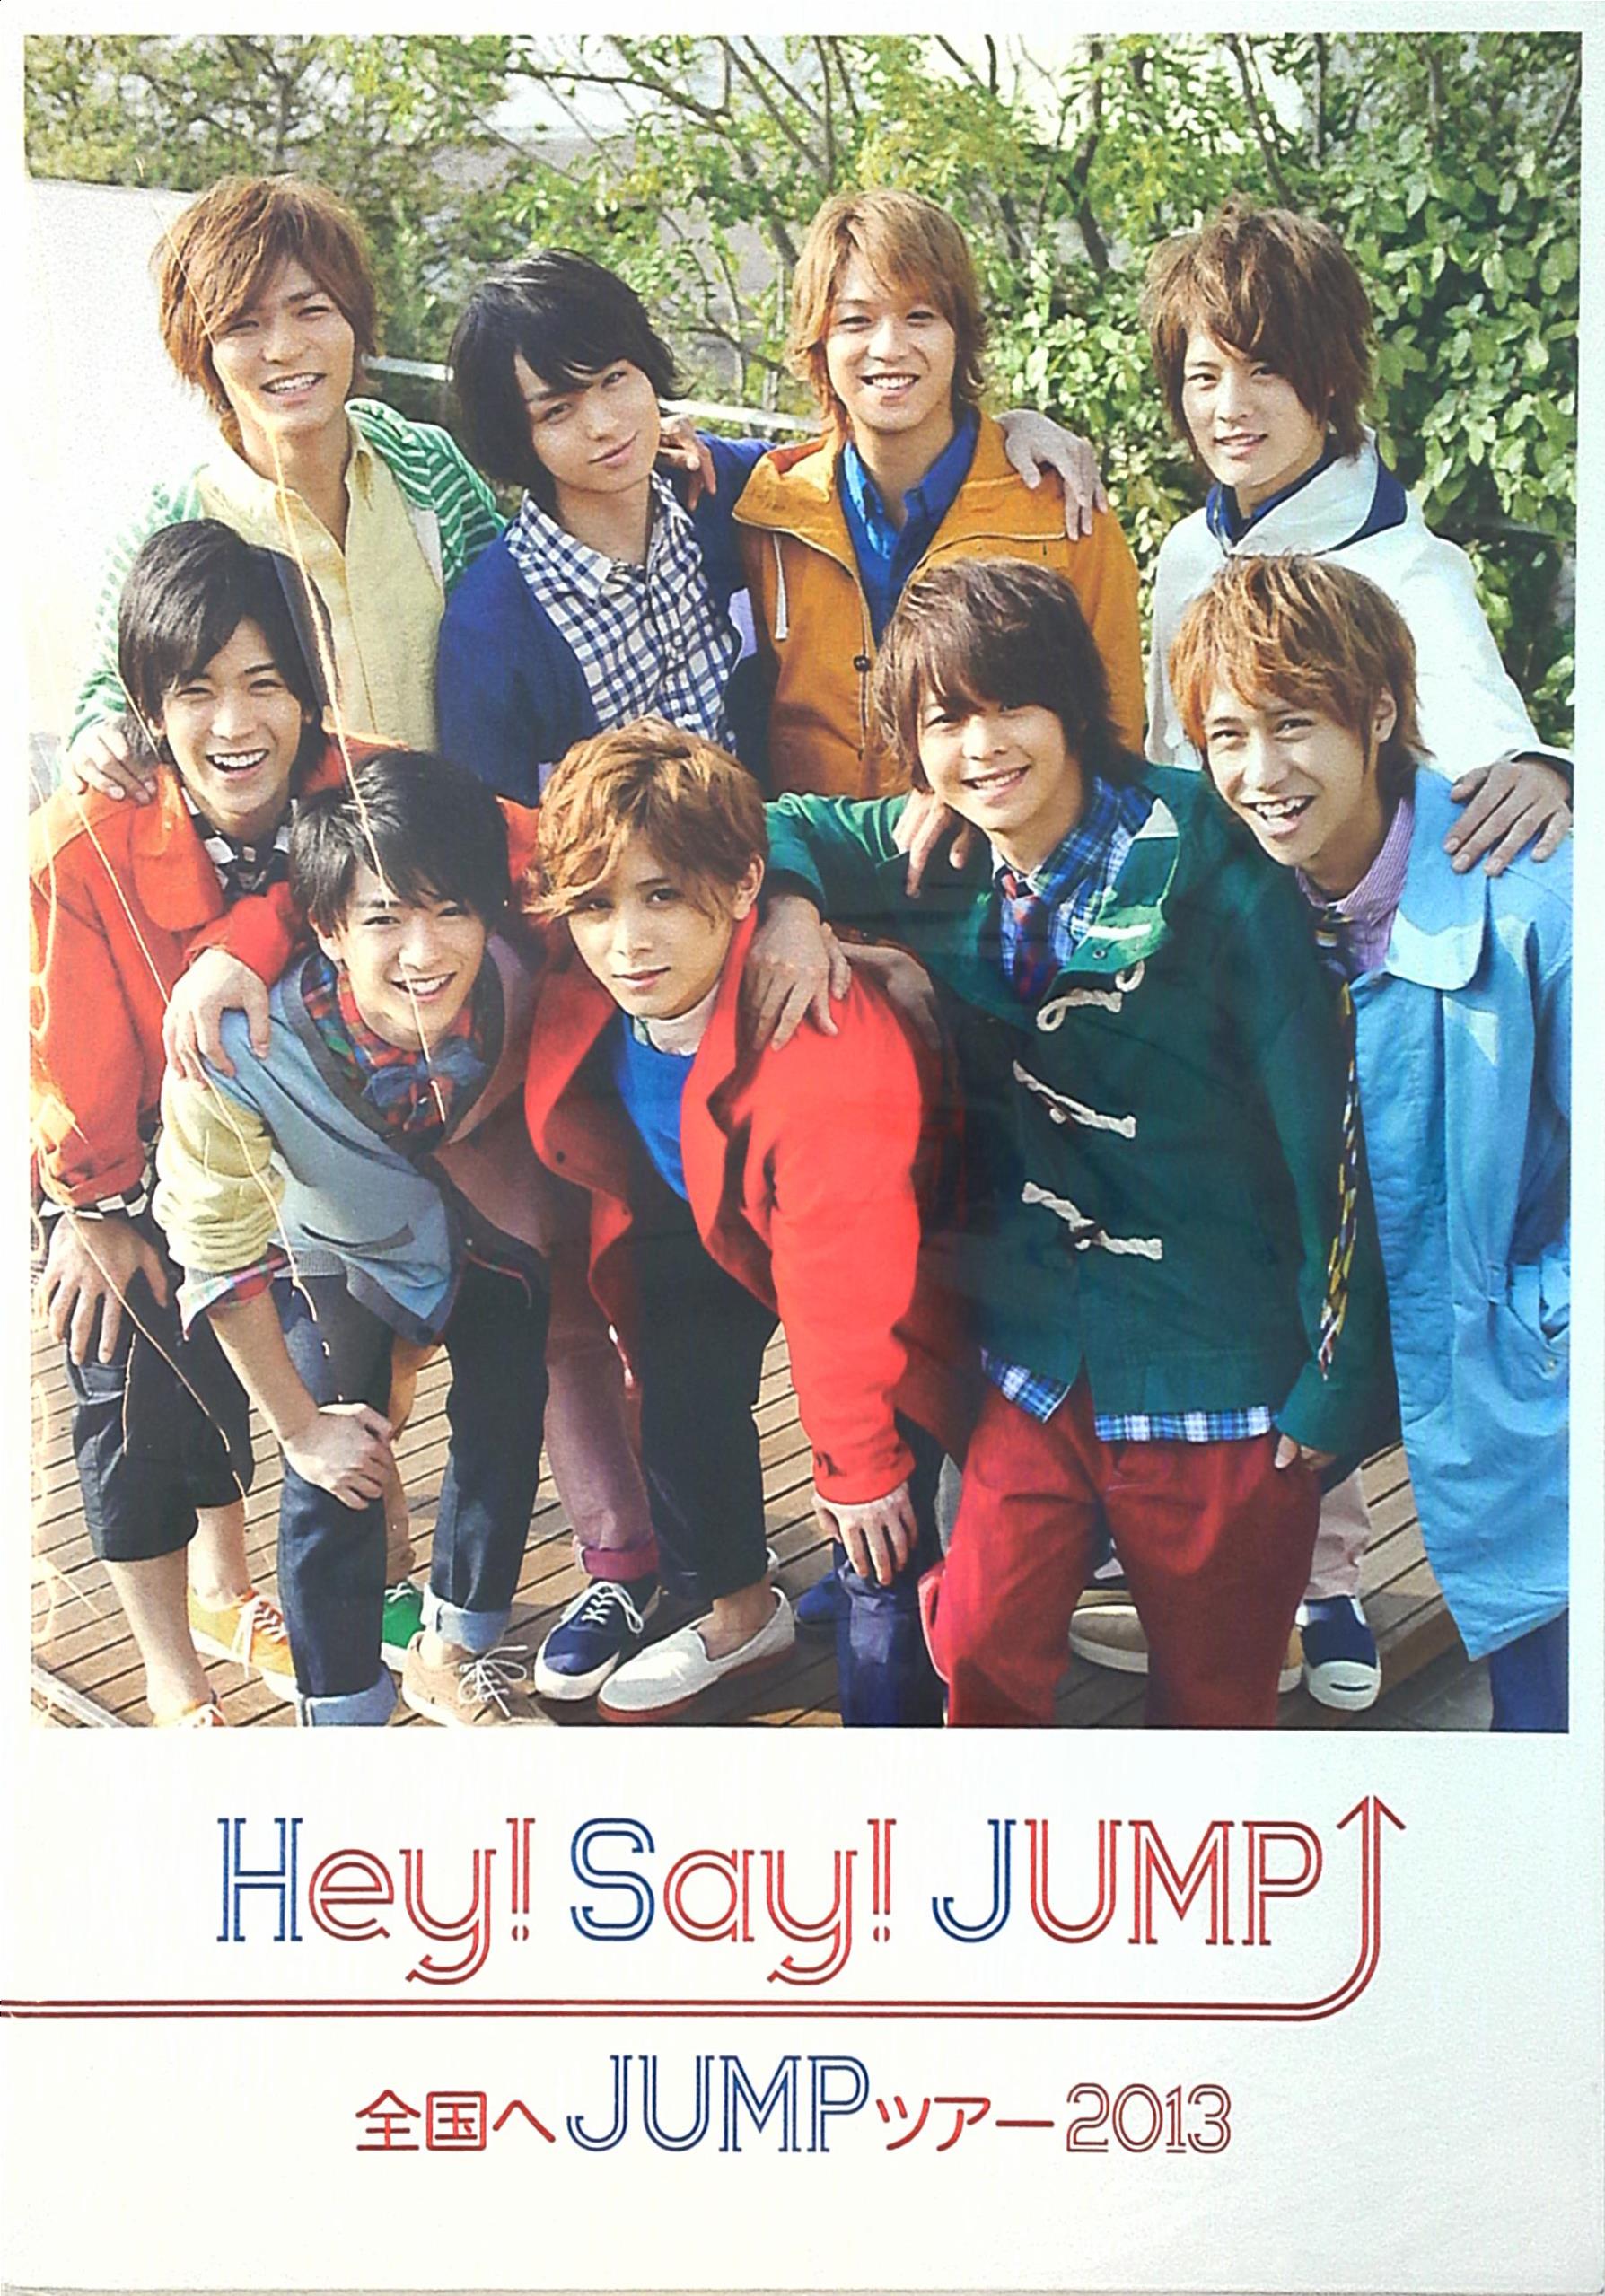 Hey! Say! JUMP ツアーパンフレット - 男性アイドル